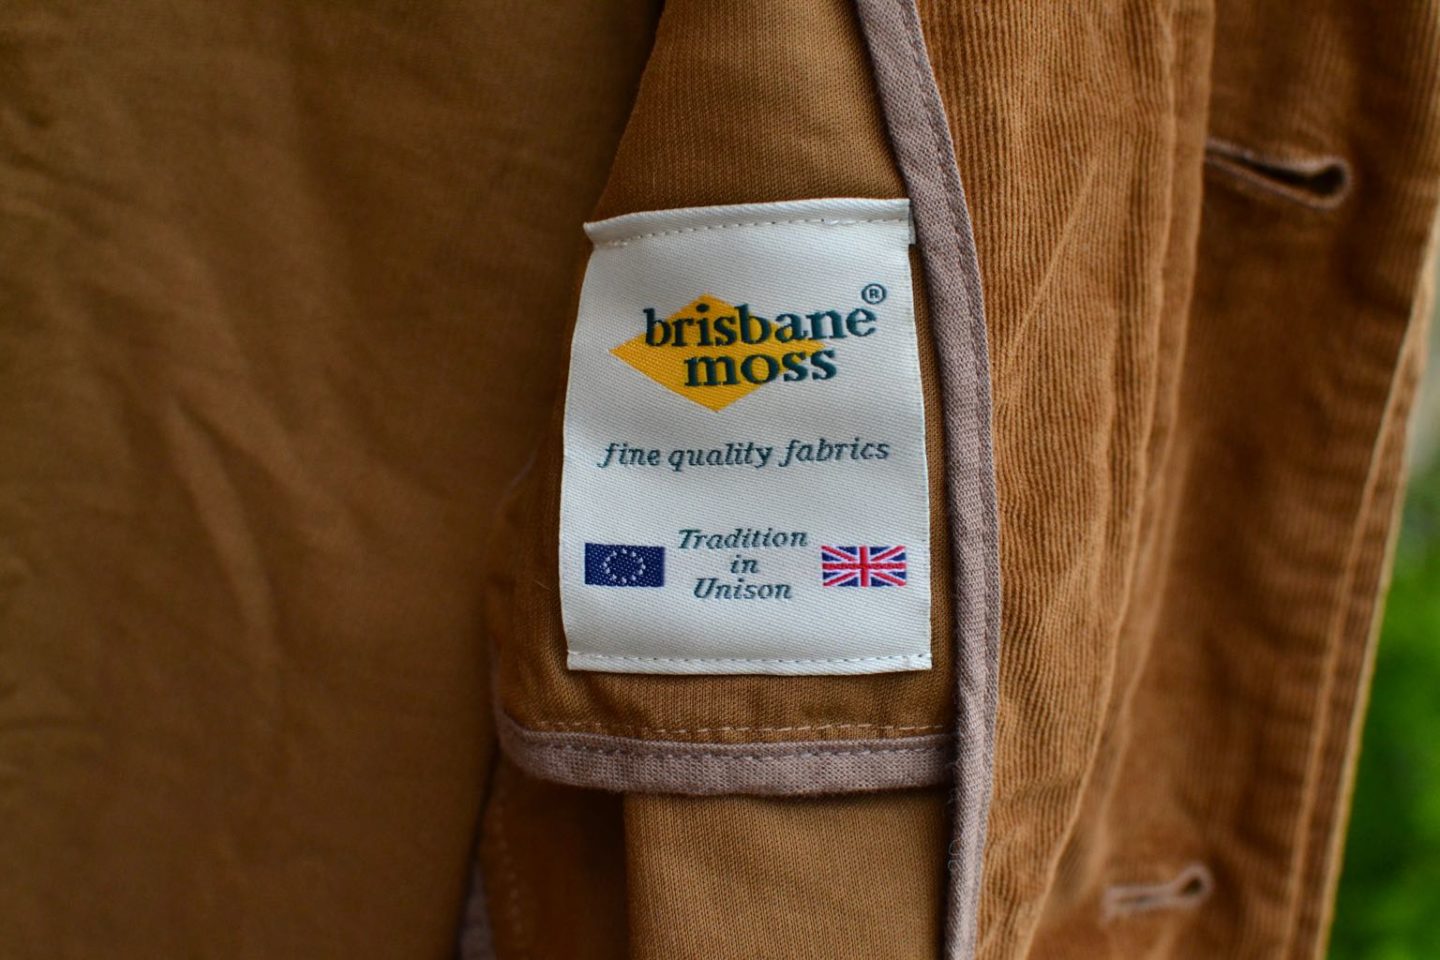 Kestin-hare-Kenmore blazer & Iverness trouser in tobacco Brisbane Moss cord